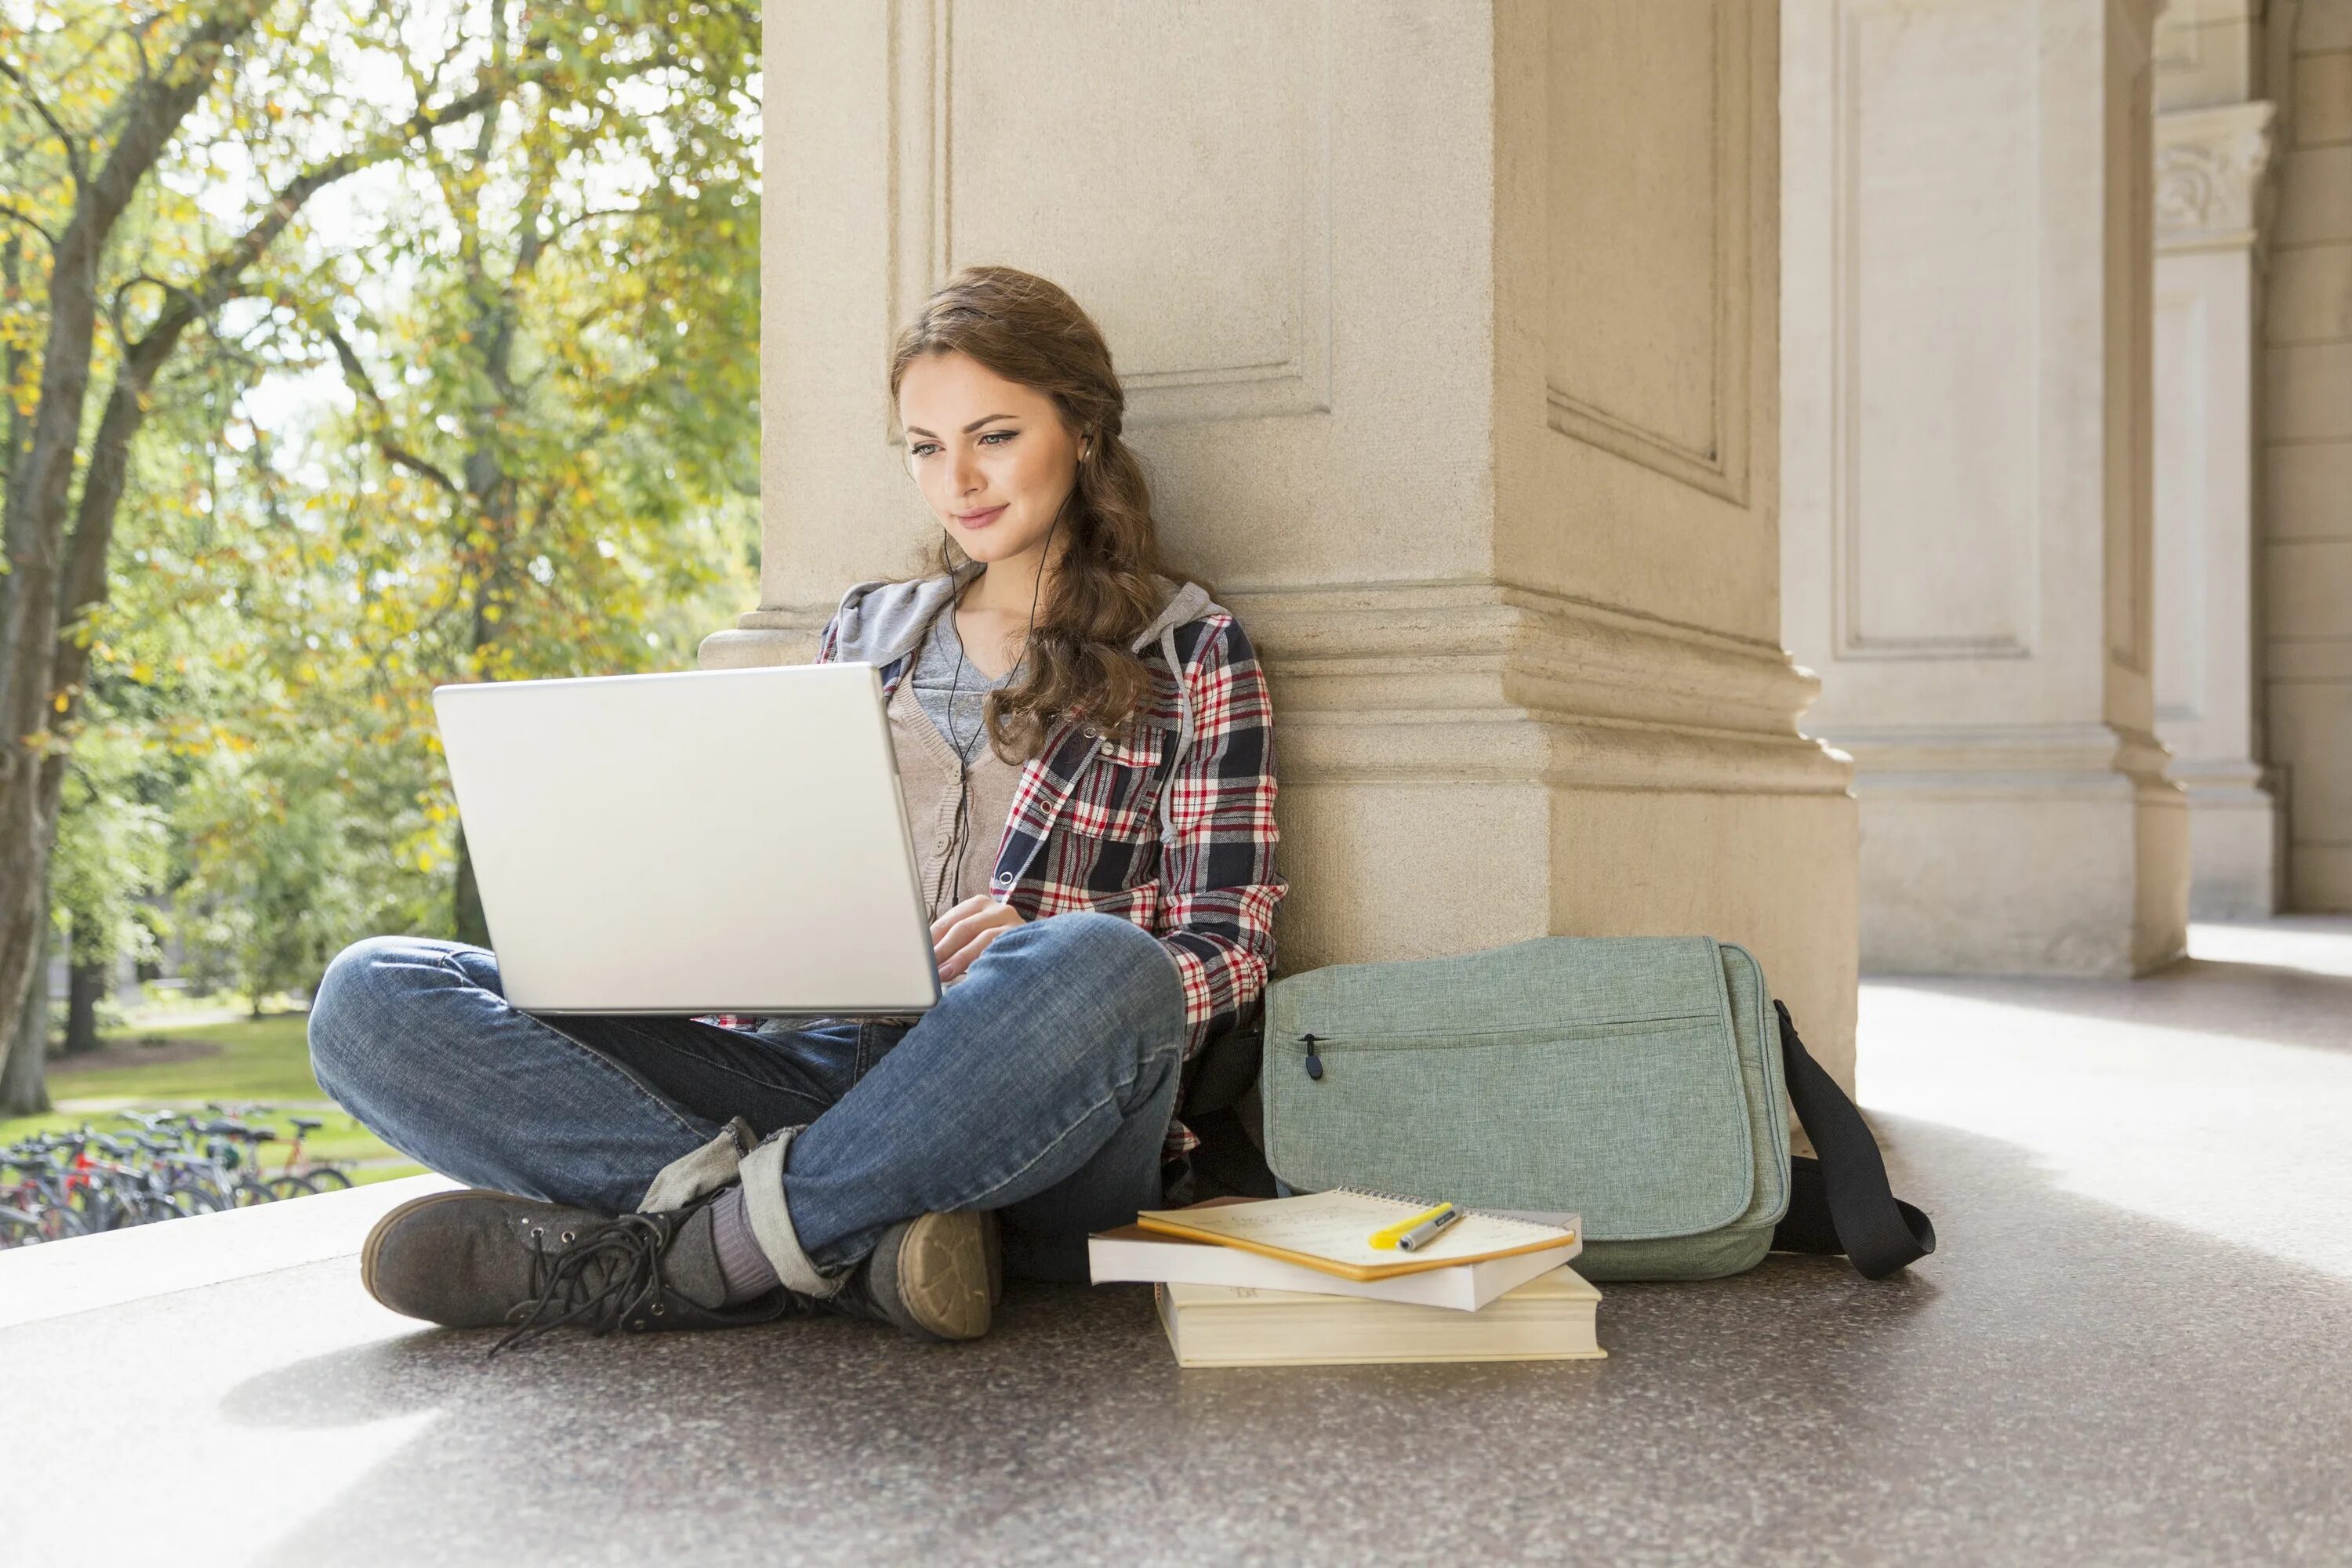 Students windows. Студент с ноутом. Студент за ноутбуком. Человек с ноутбуком. Студентка с ноутбуком.